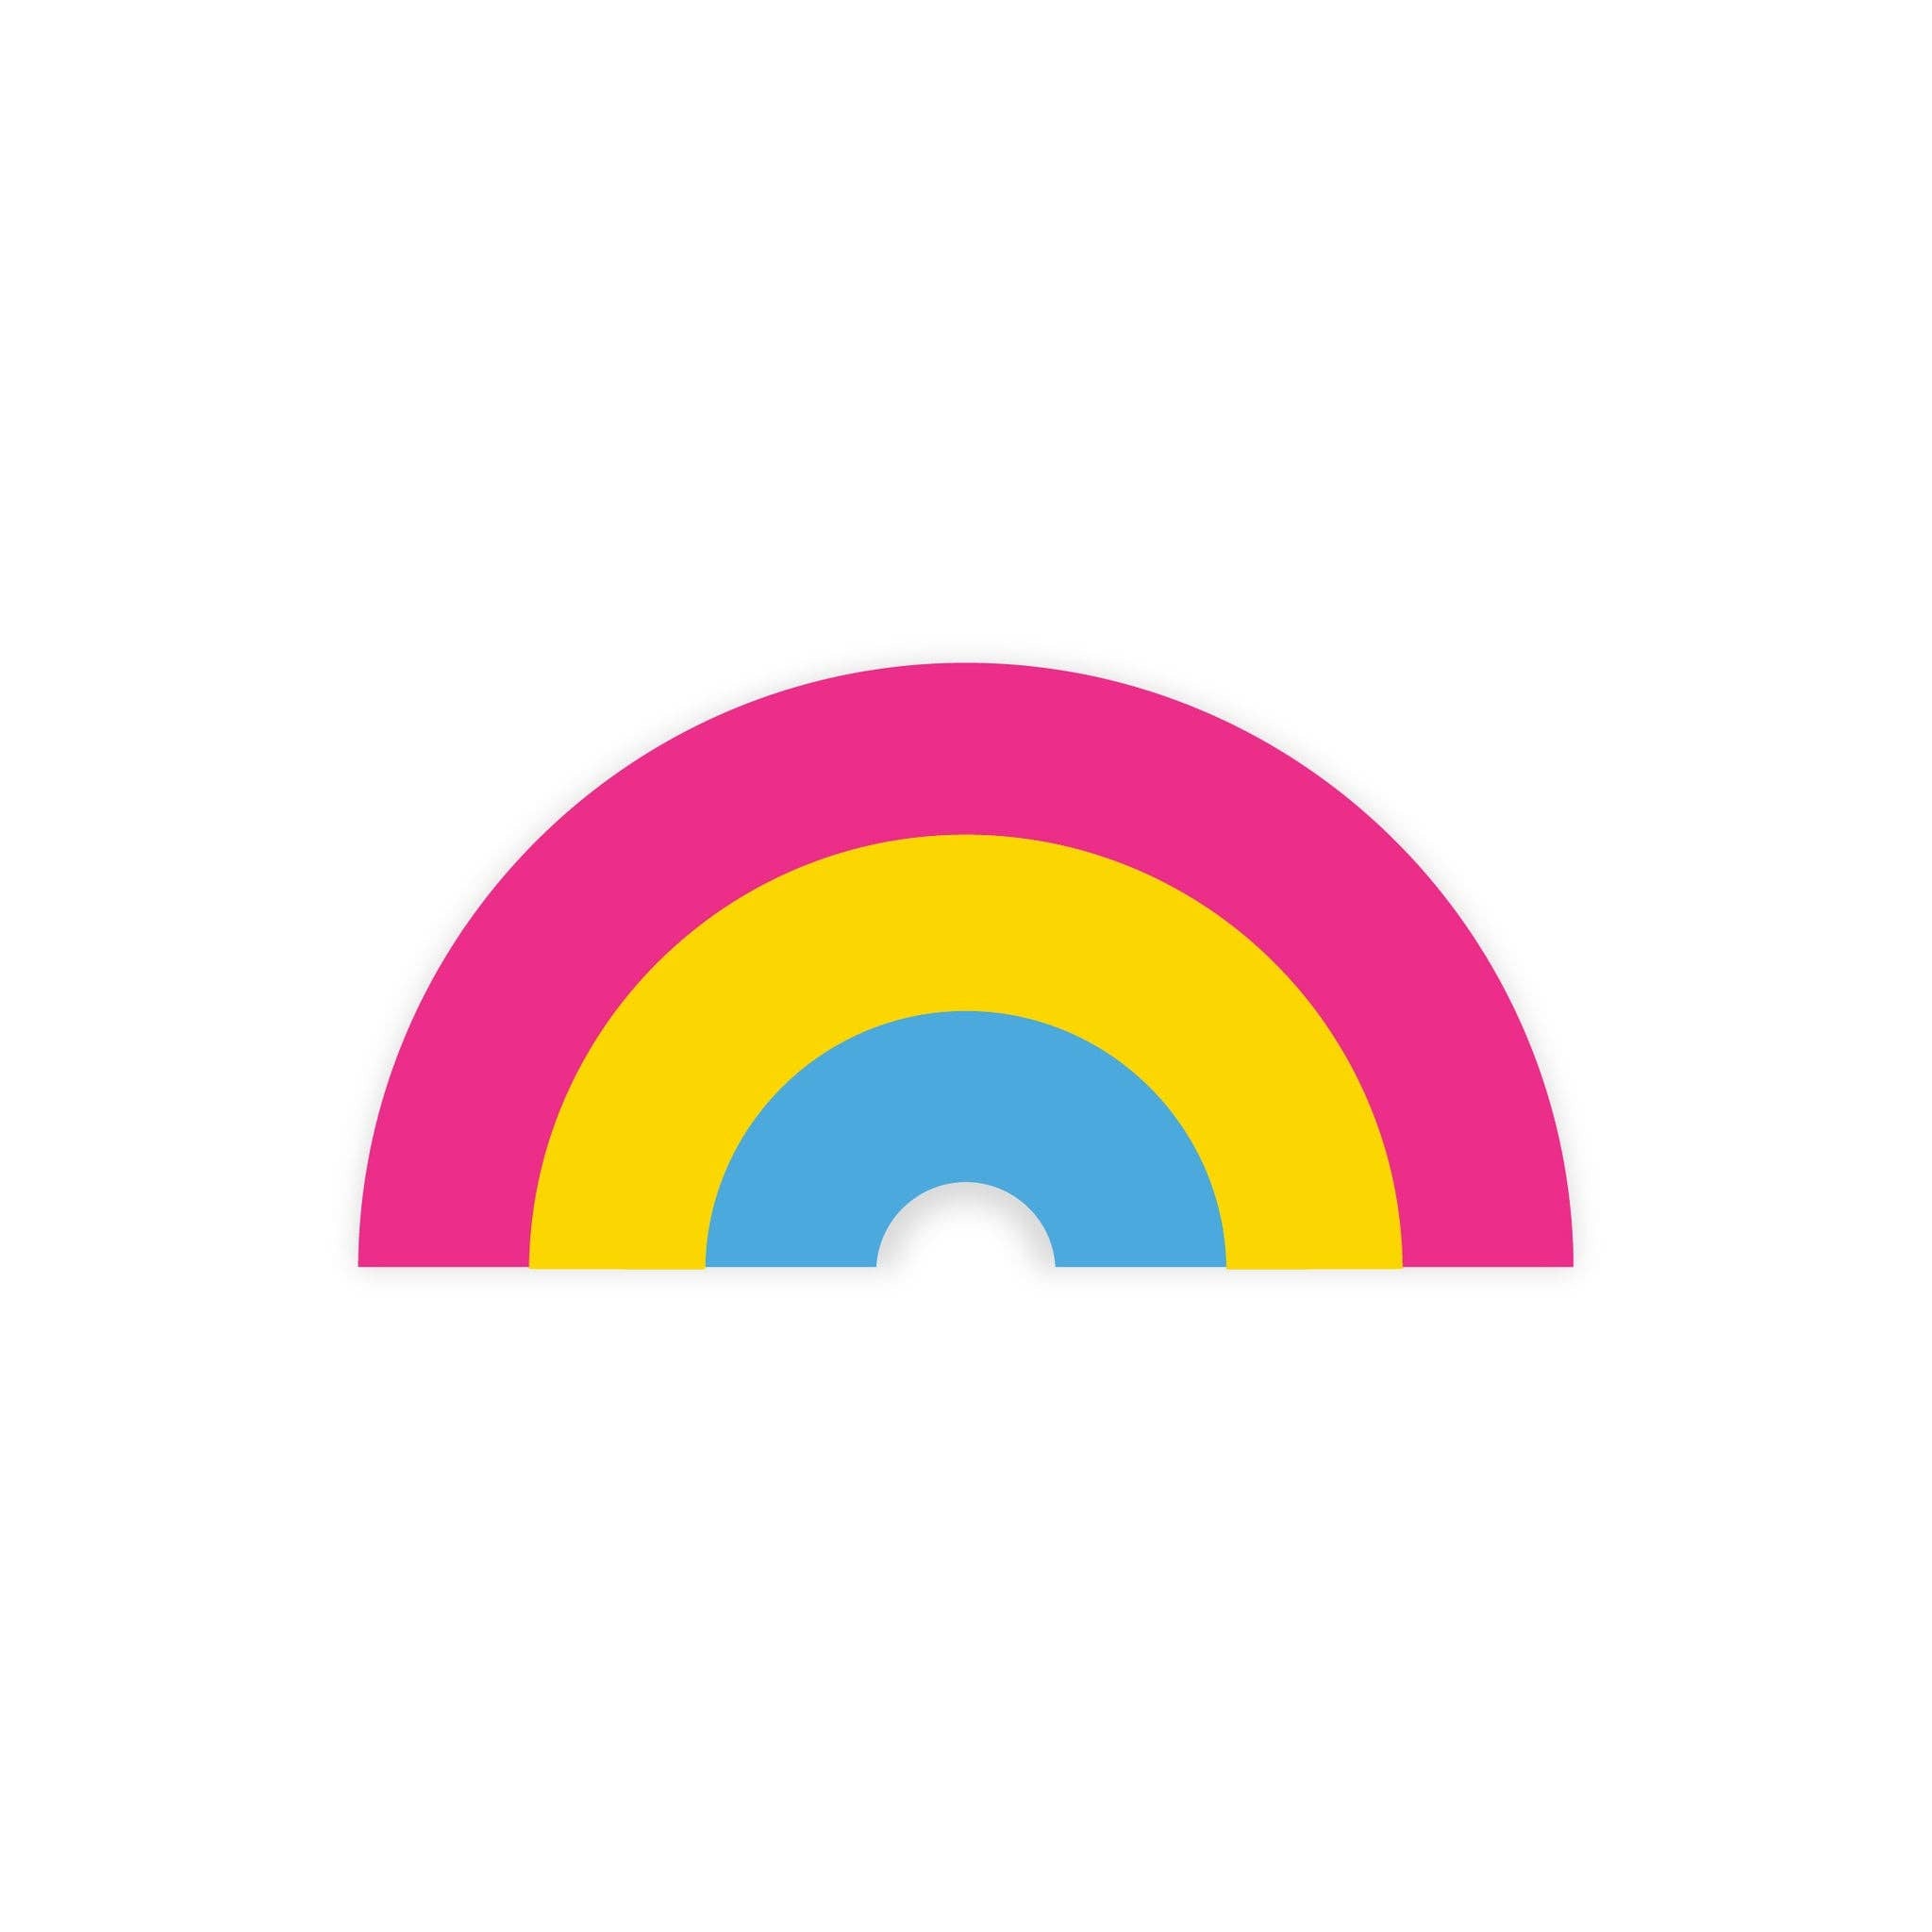 Pansexual Pride Rainbow Sticker - Spiral Circle